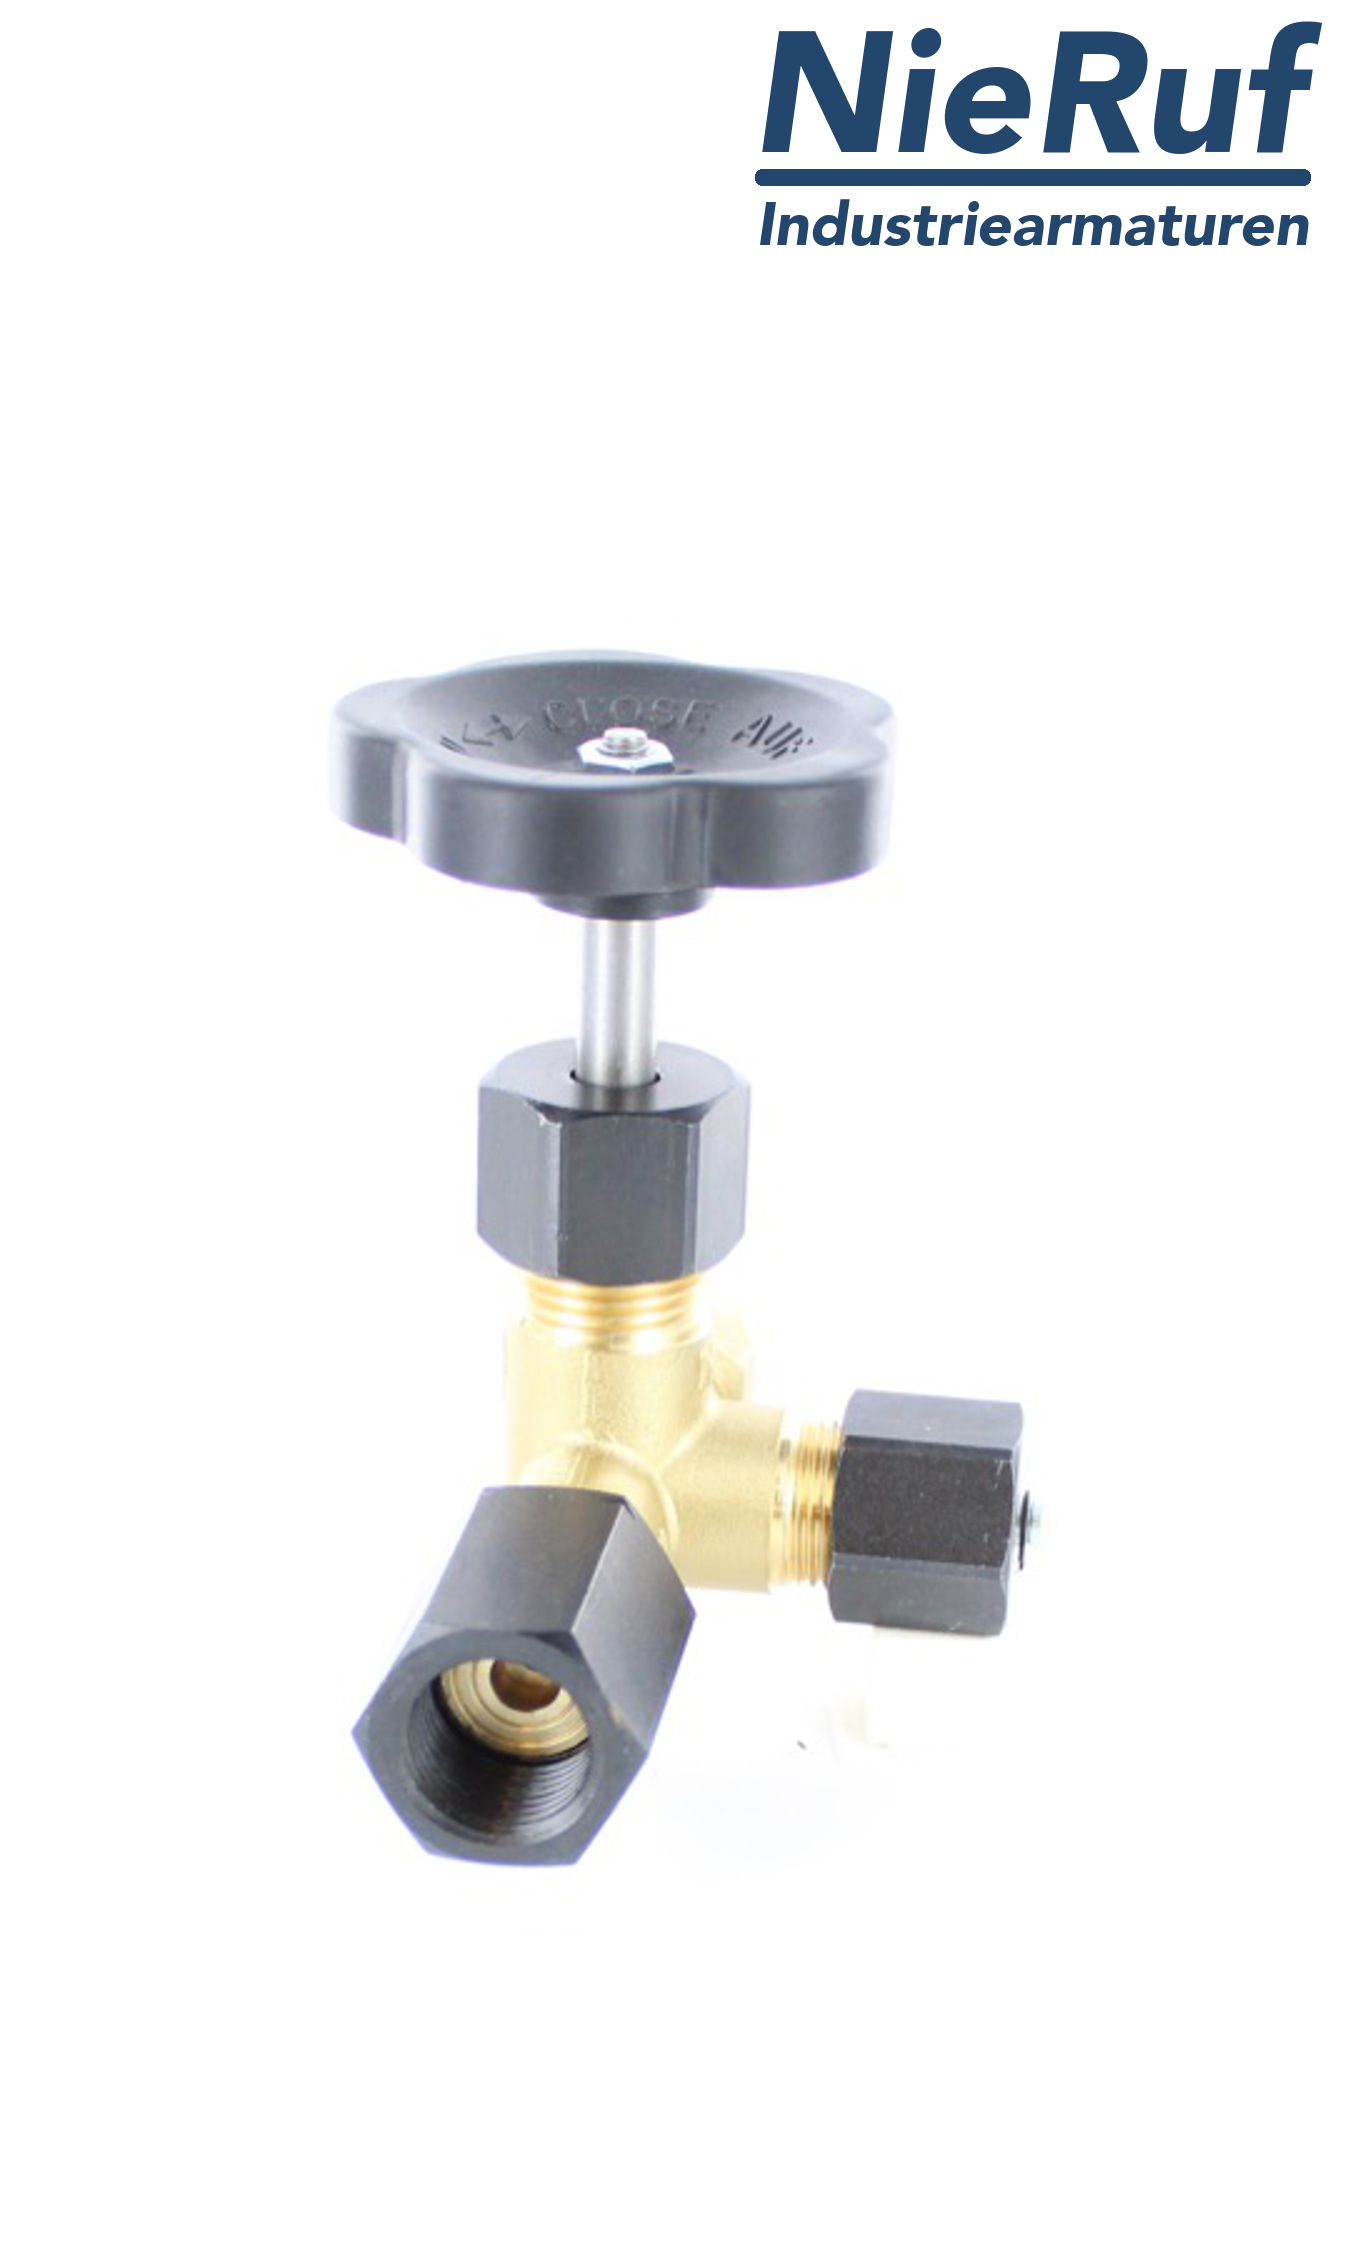 manometer gauge valves sleeve x sleeve x test connector M20x1,5 DIN 16271 brass 250 bar